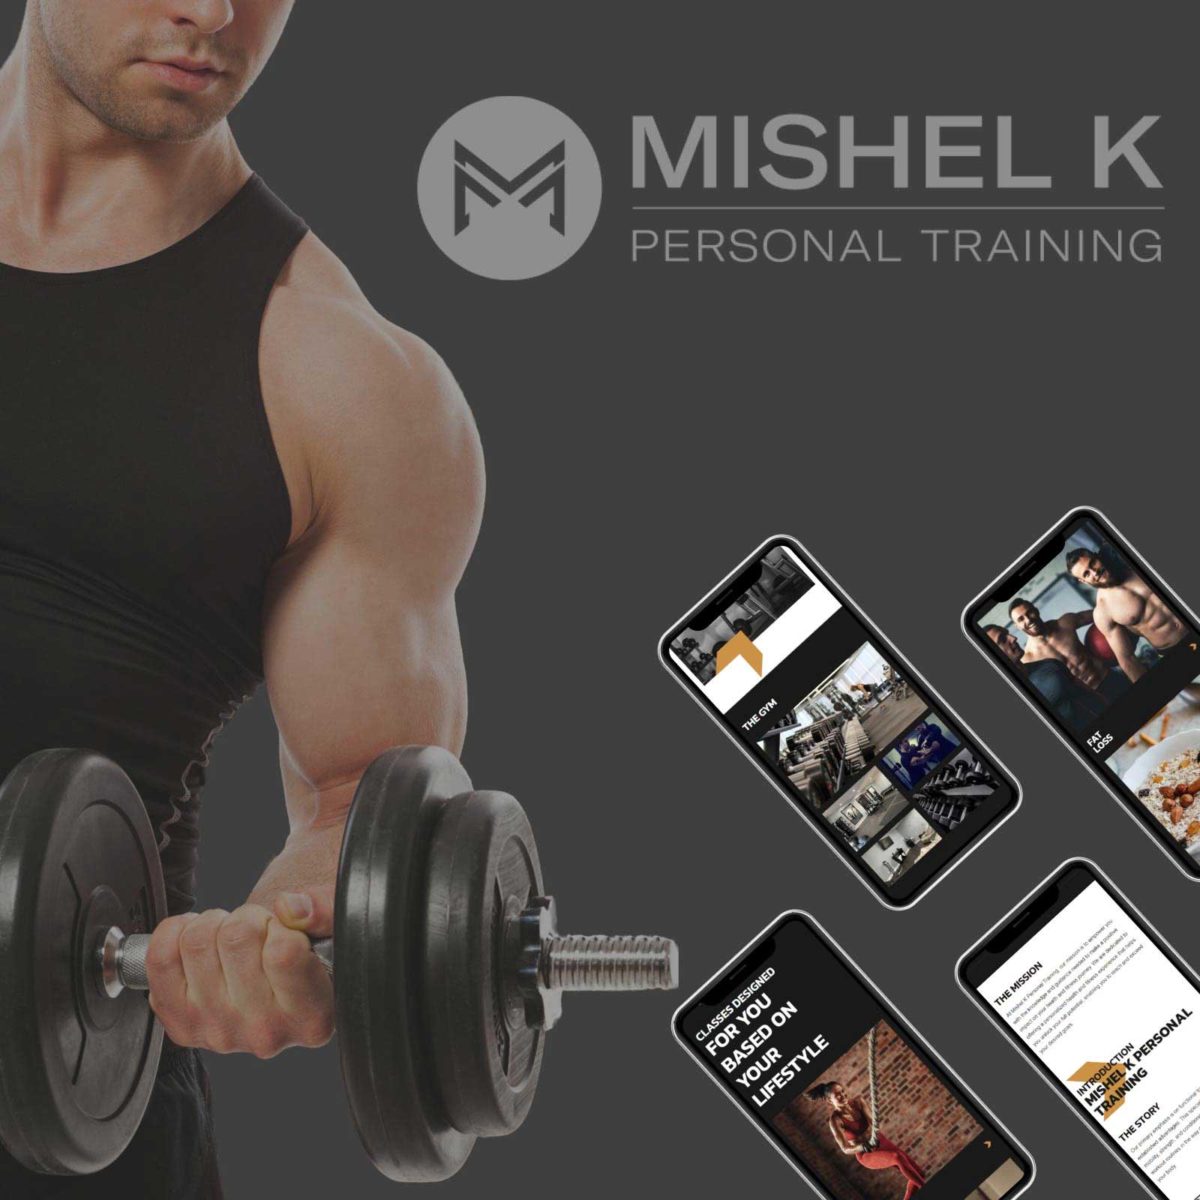 Mishel K Personal Training